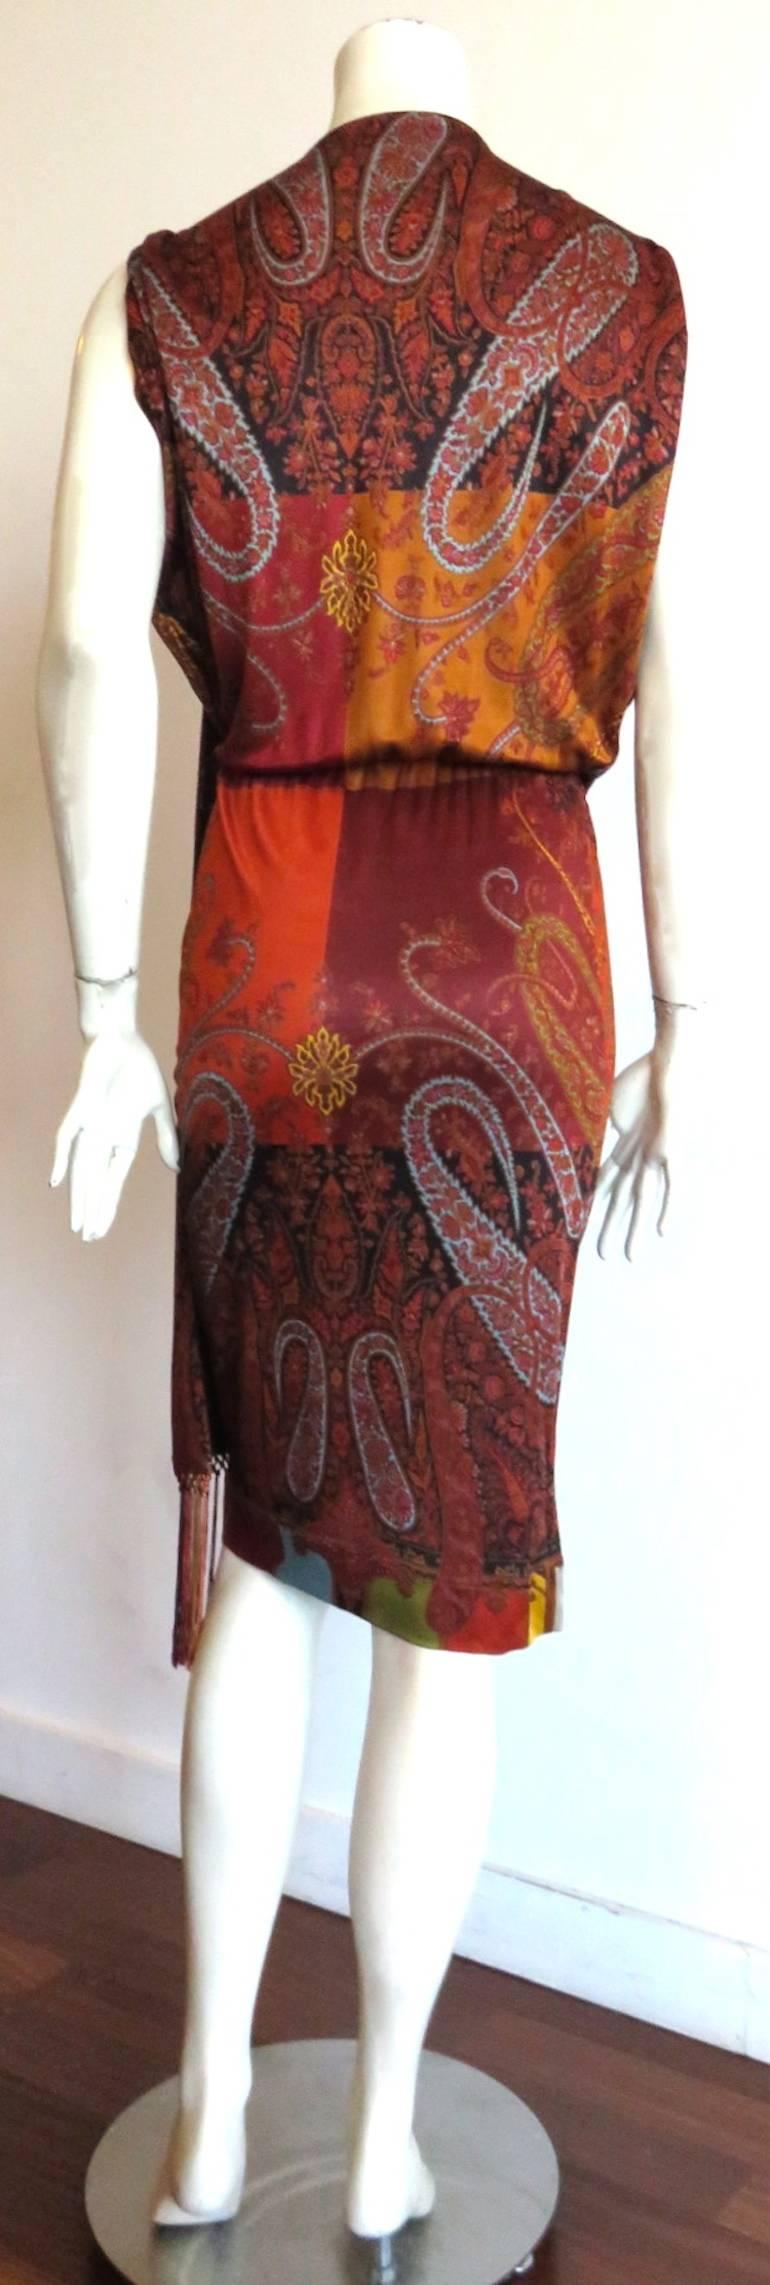 Brown HERMES PARIS by Gaultier Paisley scarf dress